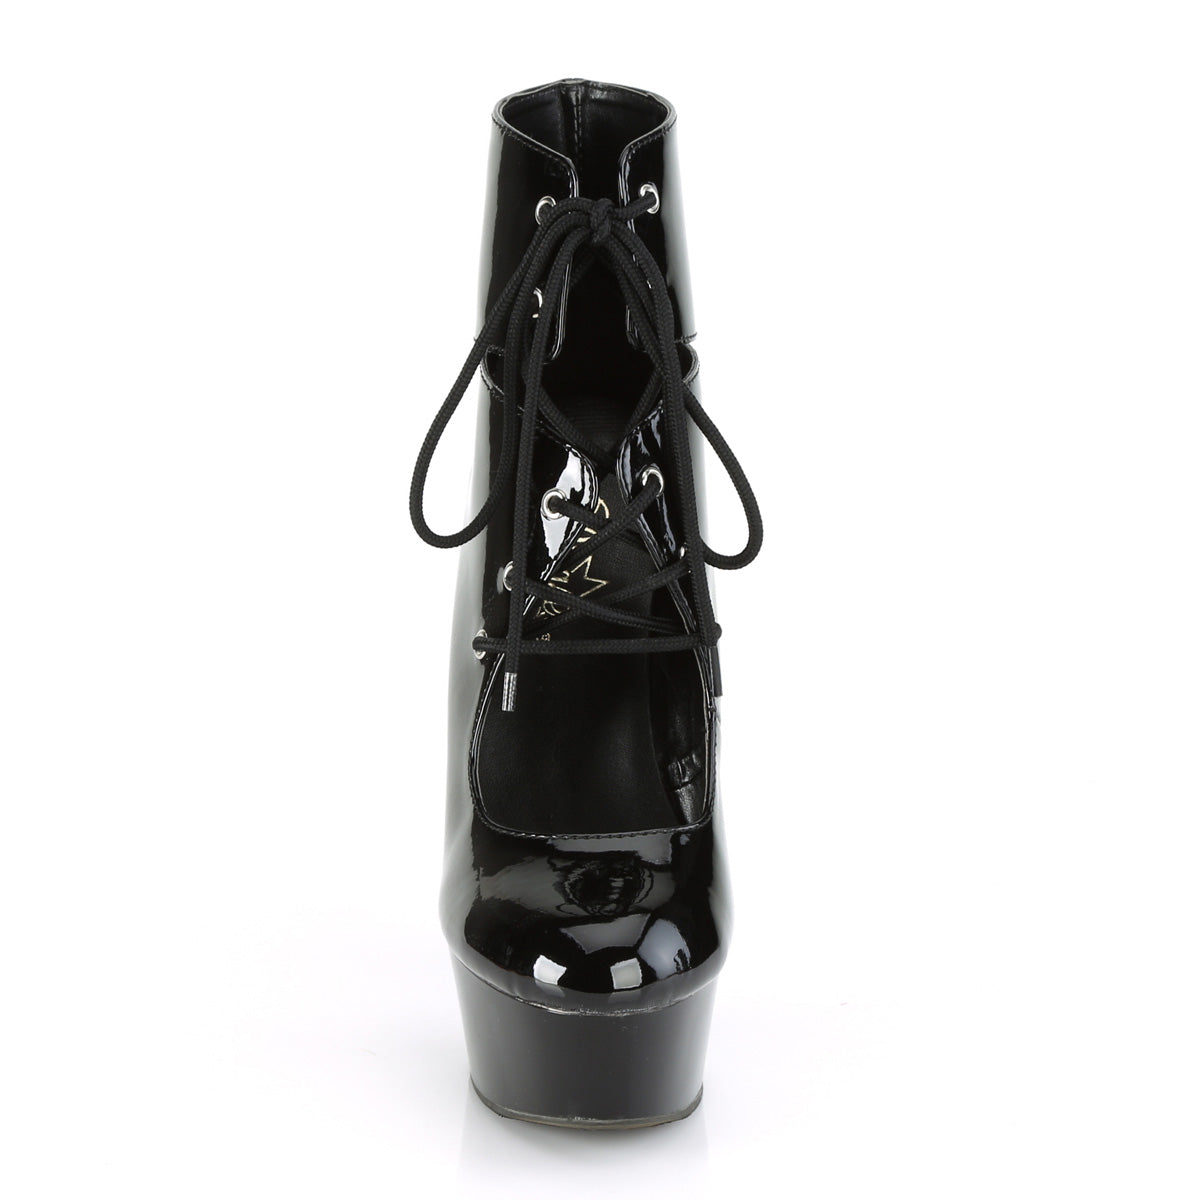 DELIGHT-600-22 Black Calf High Boots